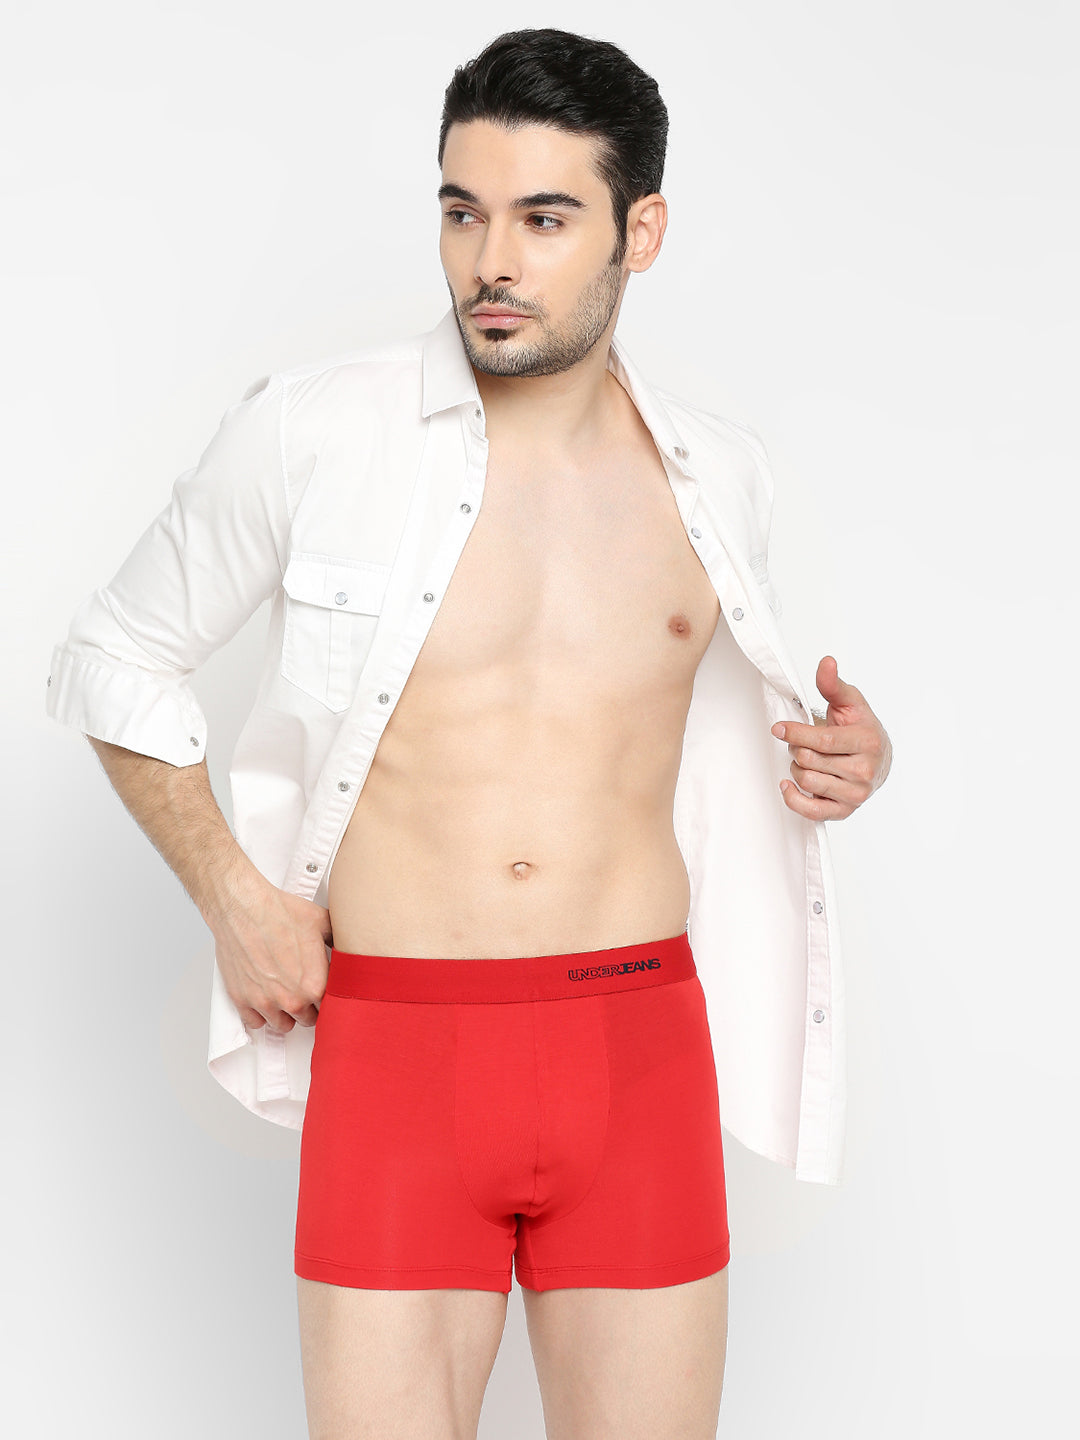 Men Premium Micromodal Red Trunk - UnderJeans by Spykar